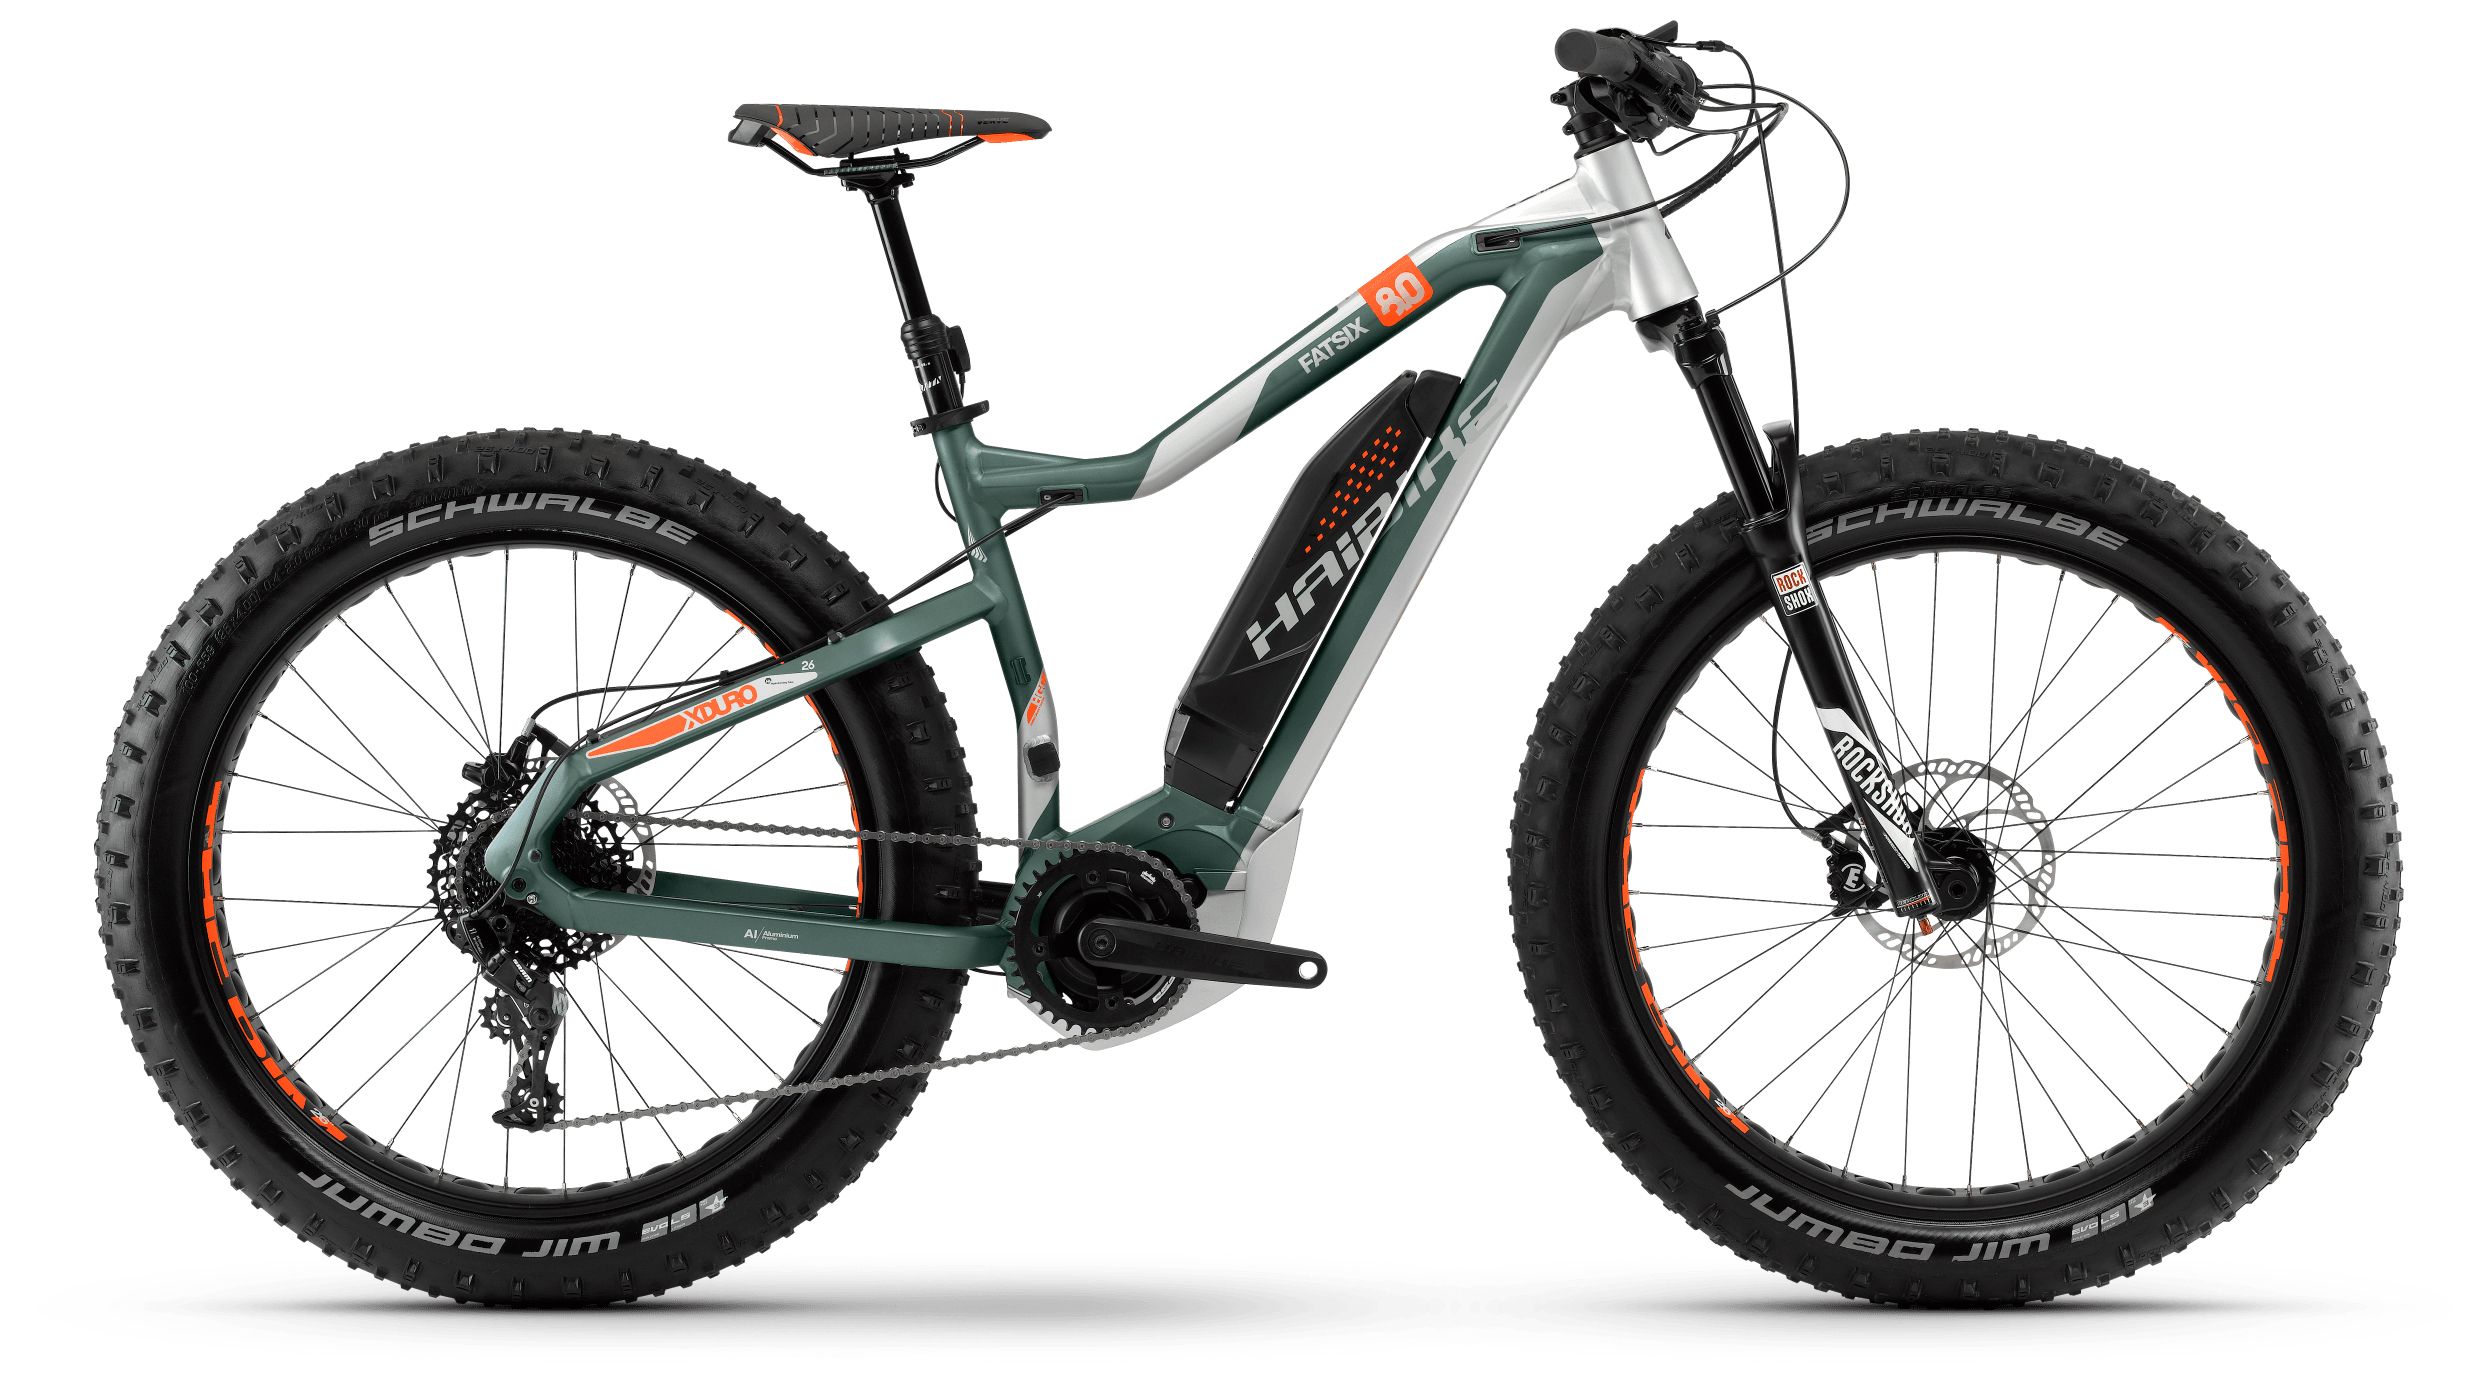  Велосипед Haibike Xduro FatSix 8.0 500Wh 11s NX 2018